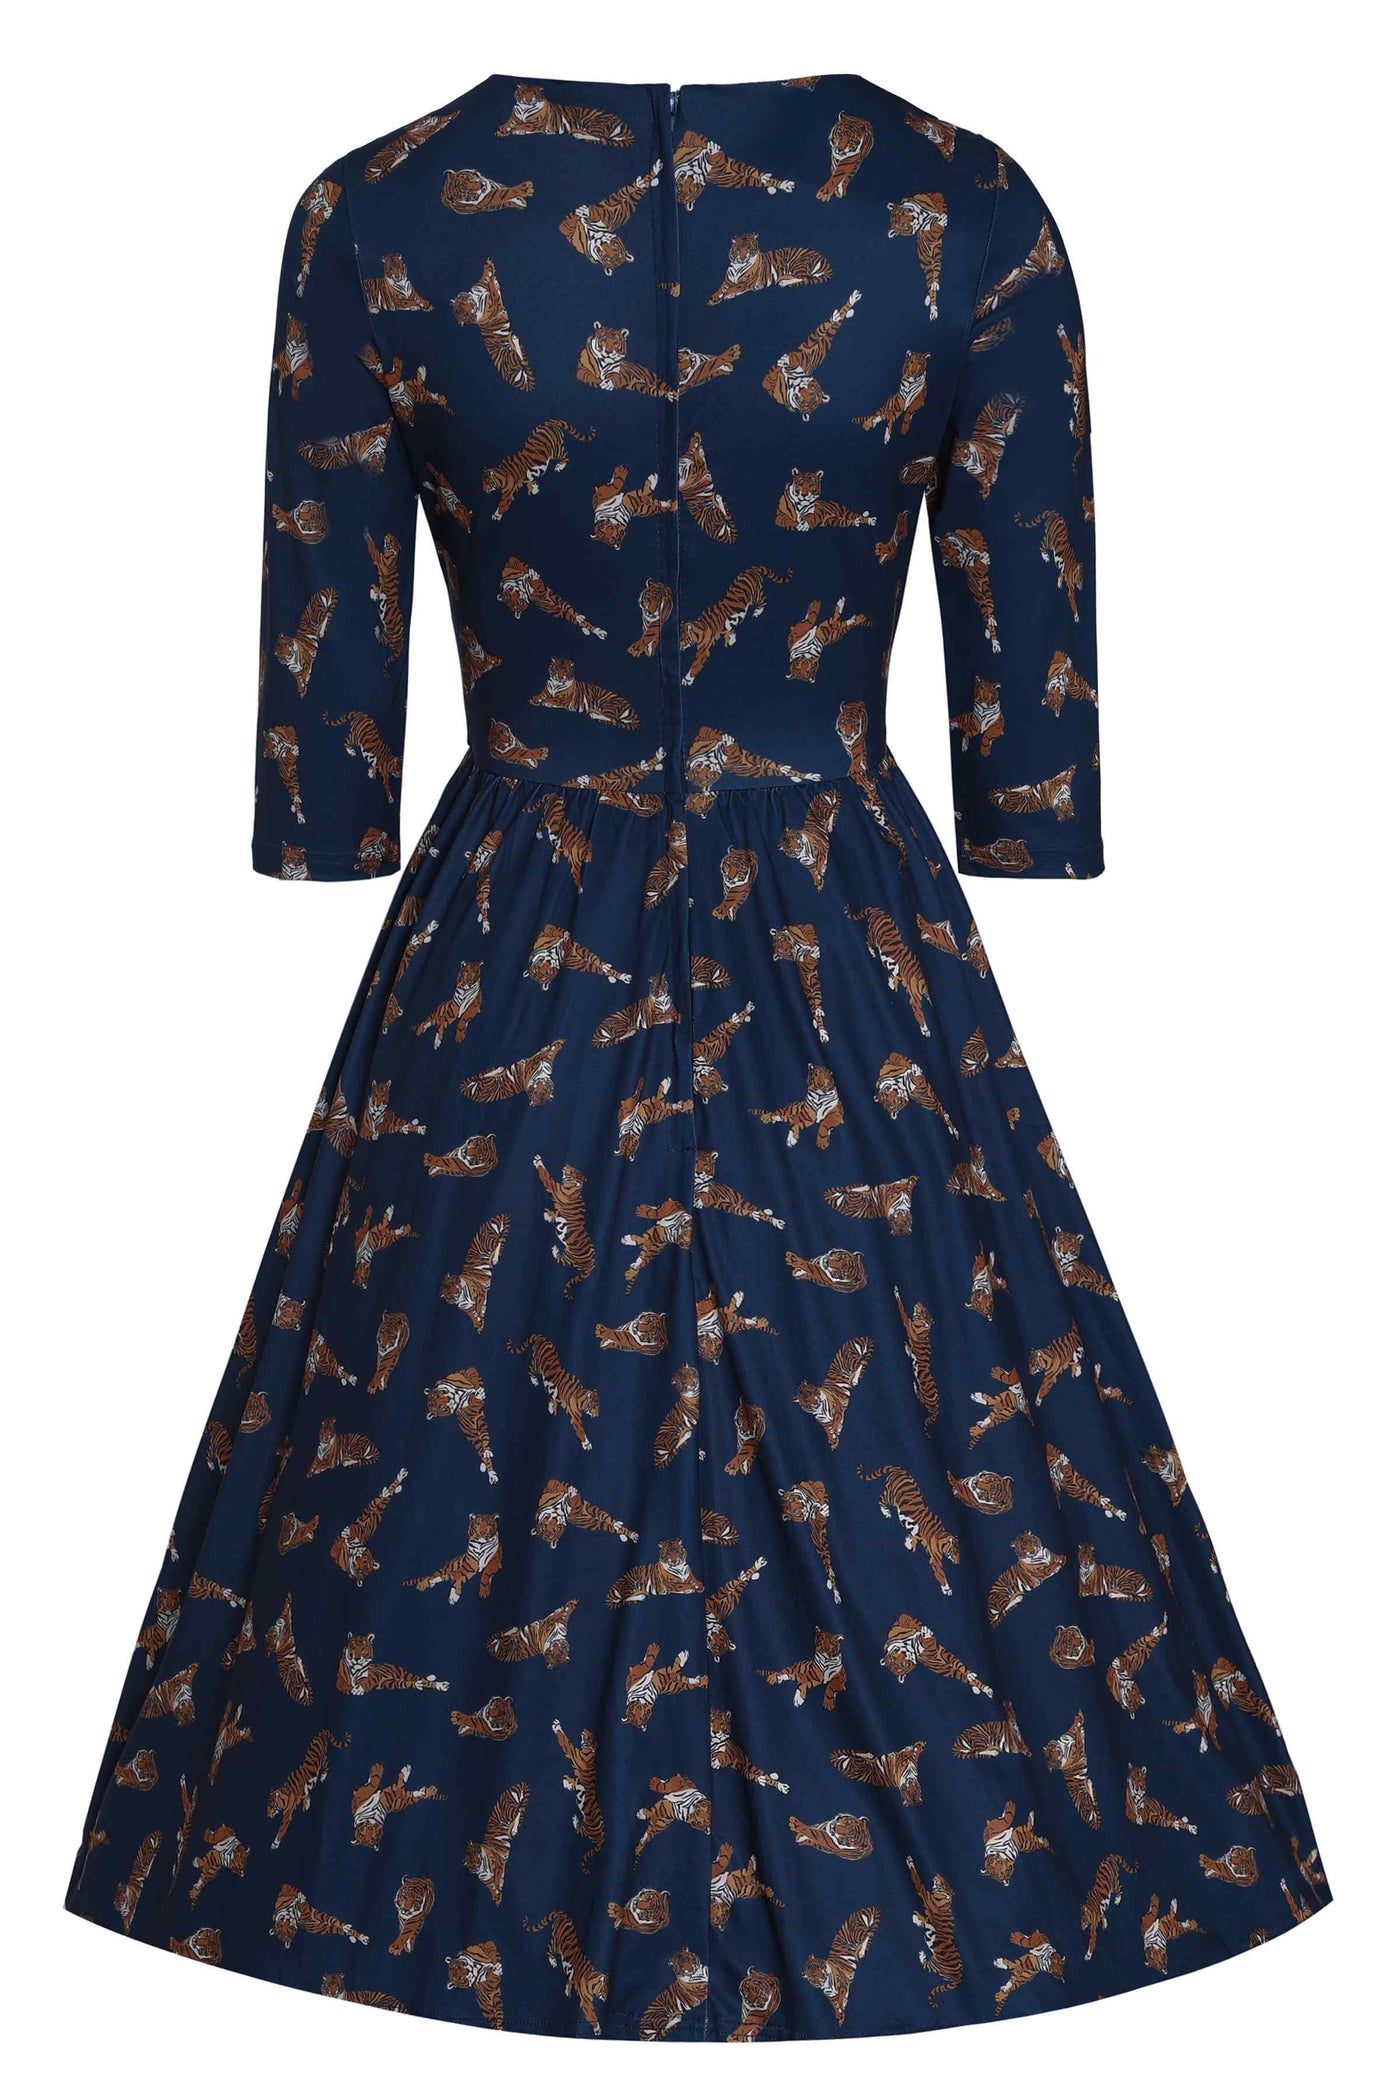 Tiger Print Dress in Navy Blue